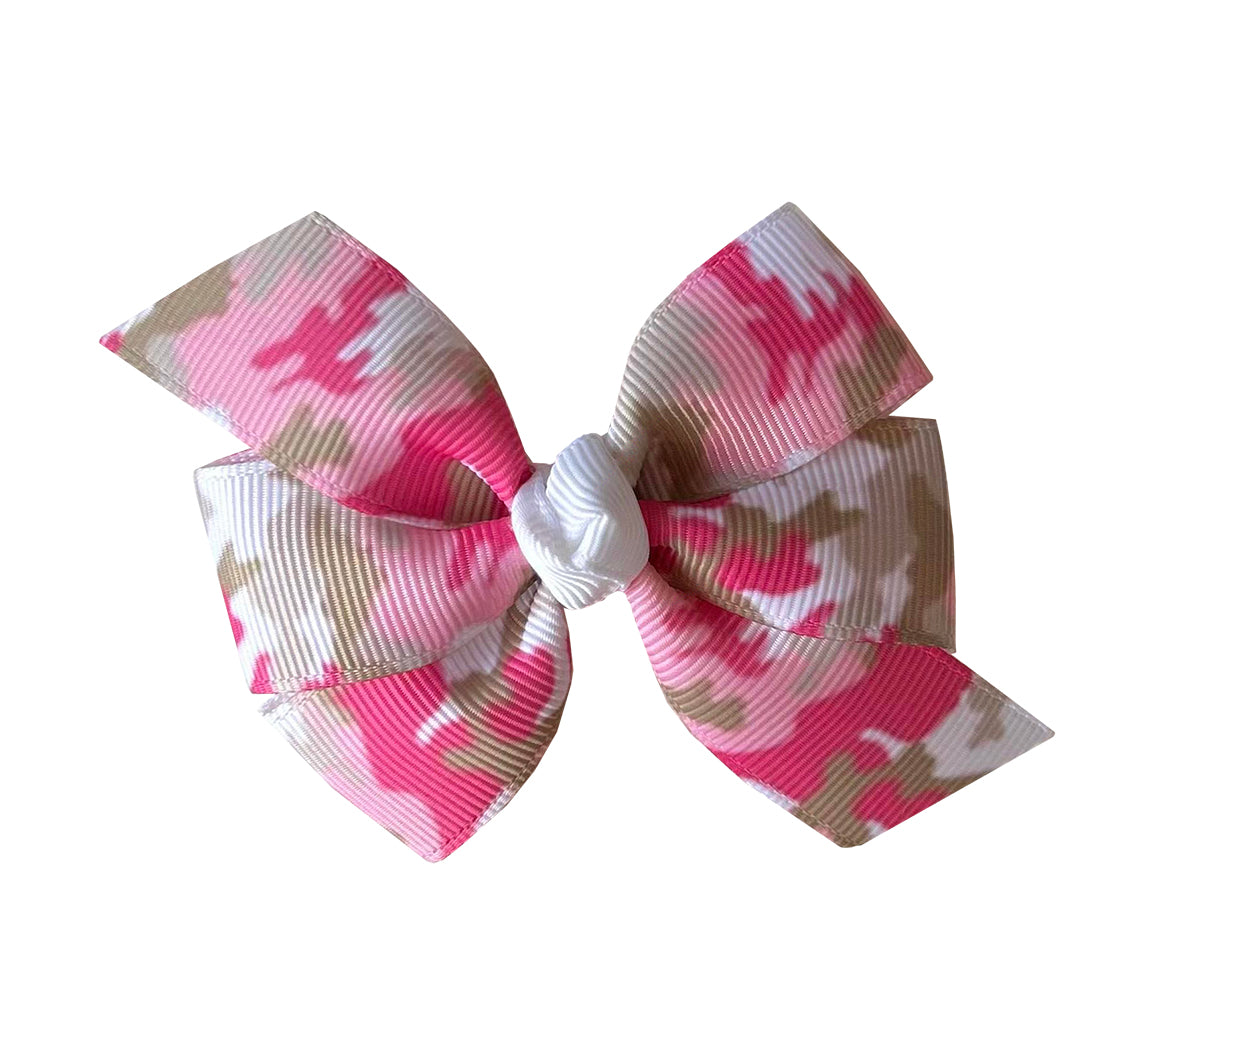 WD2U Baby-Girls Infant Pink Camouflage Camo Hair Bow Stretch Headband